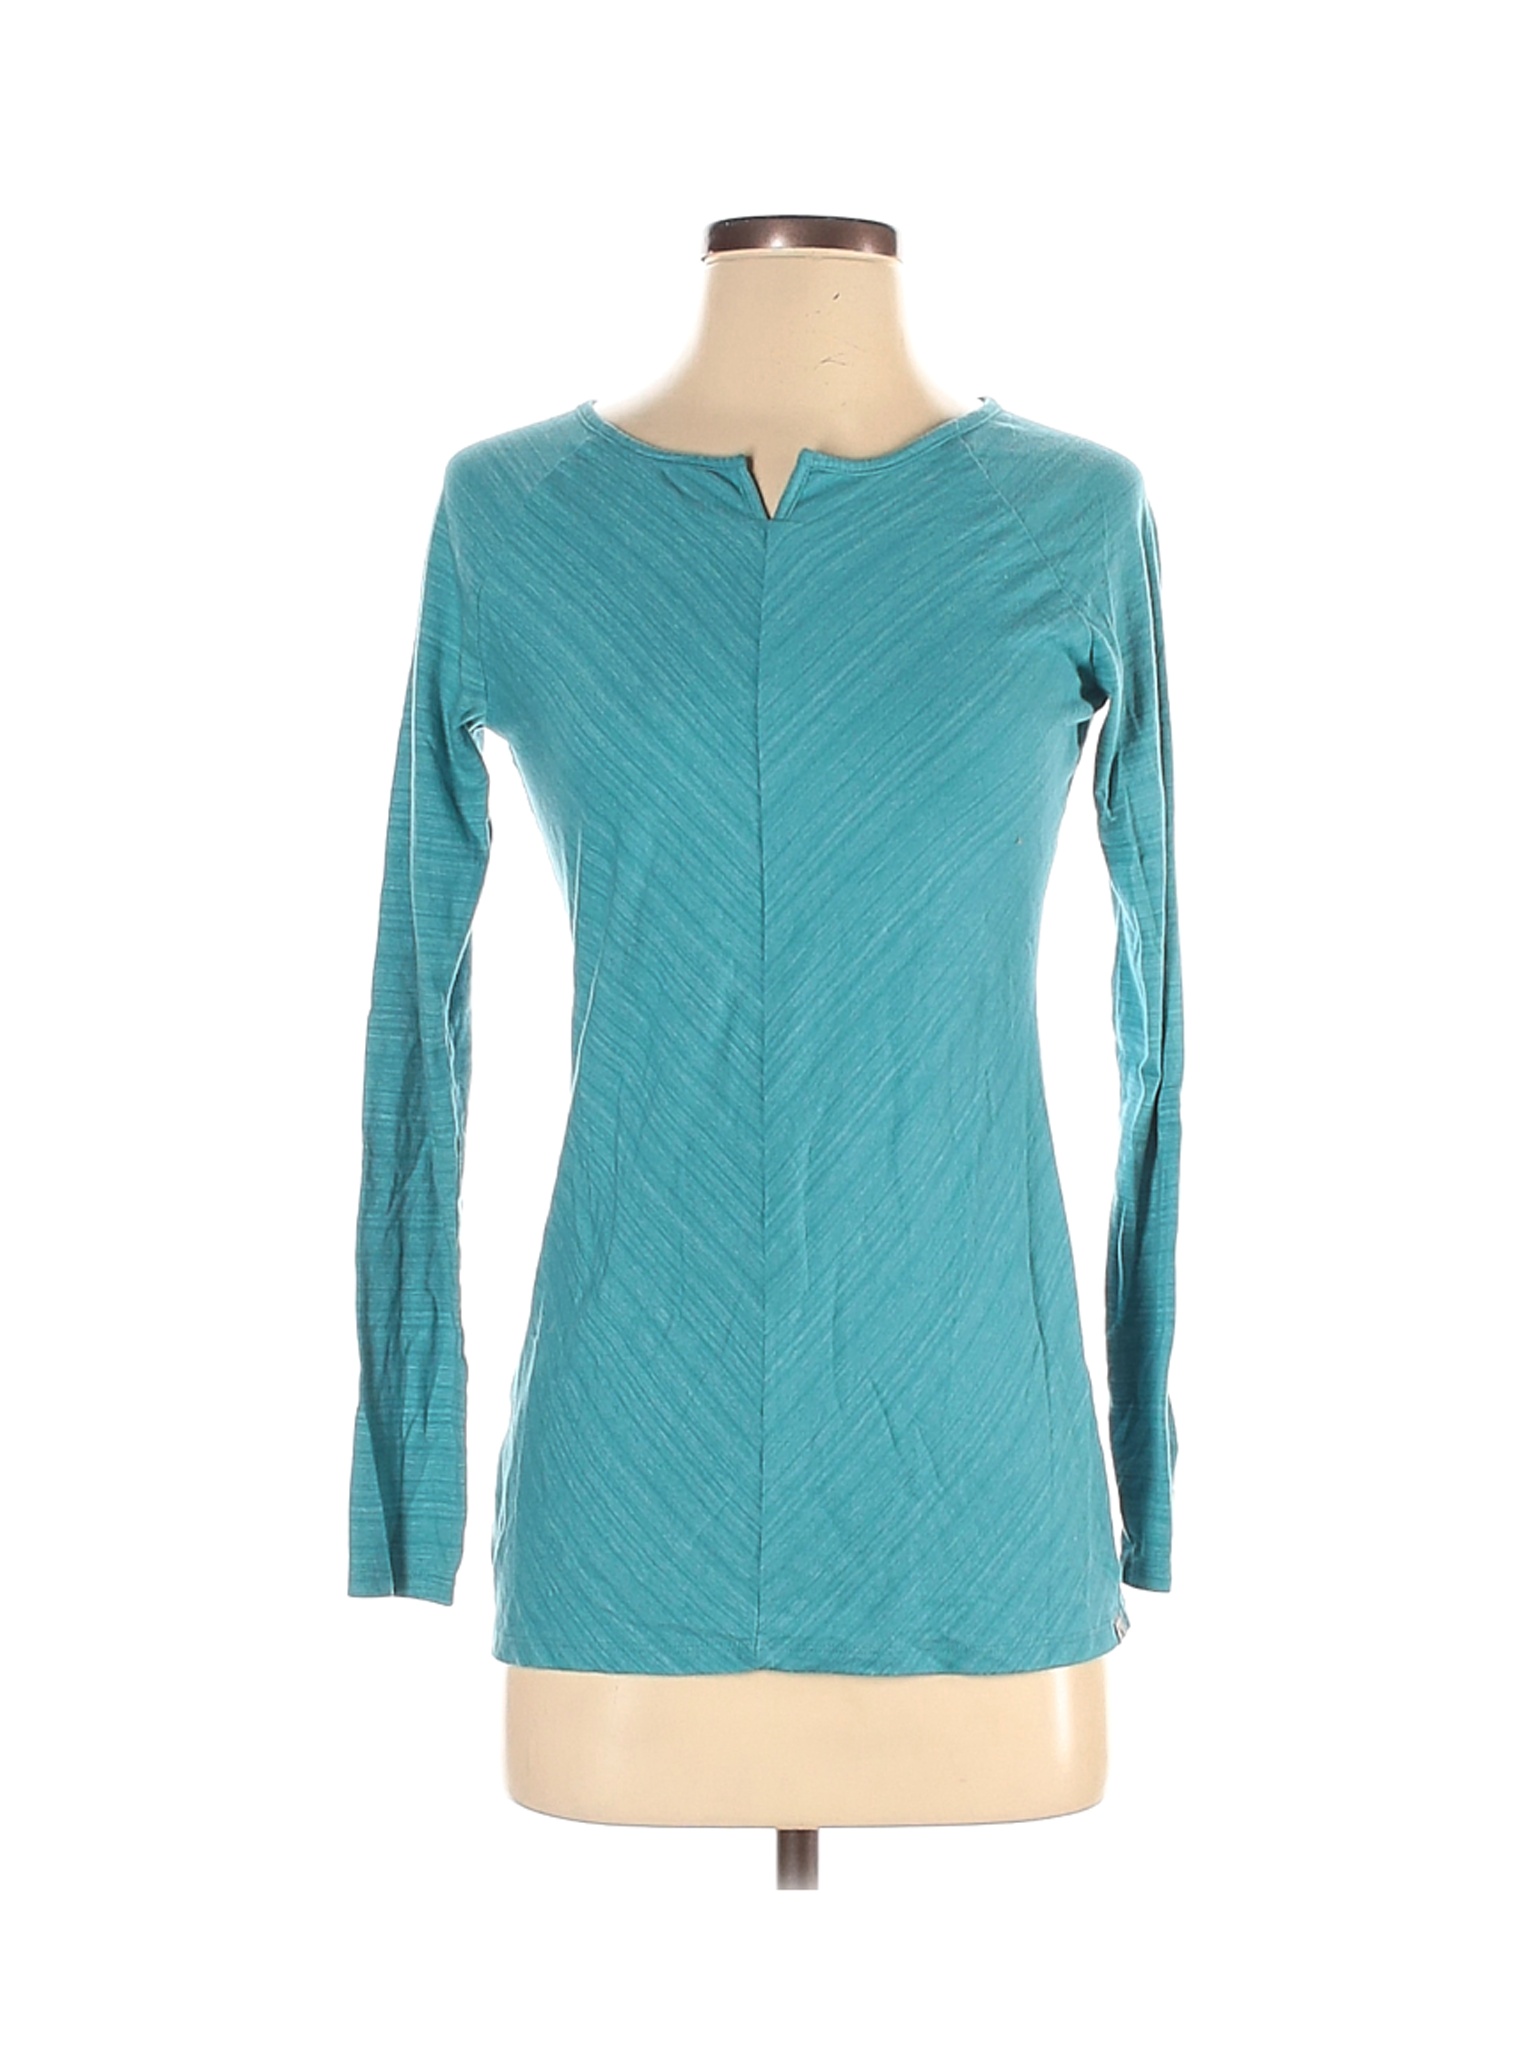 Eddie Bauer Women Green Long Sleeve T-Shirt XS | eBay